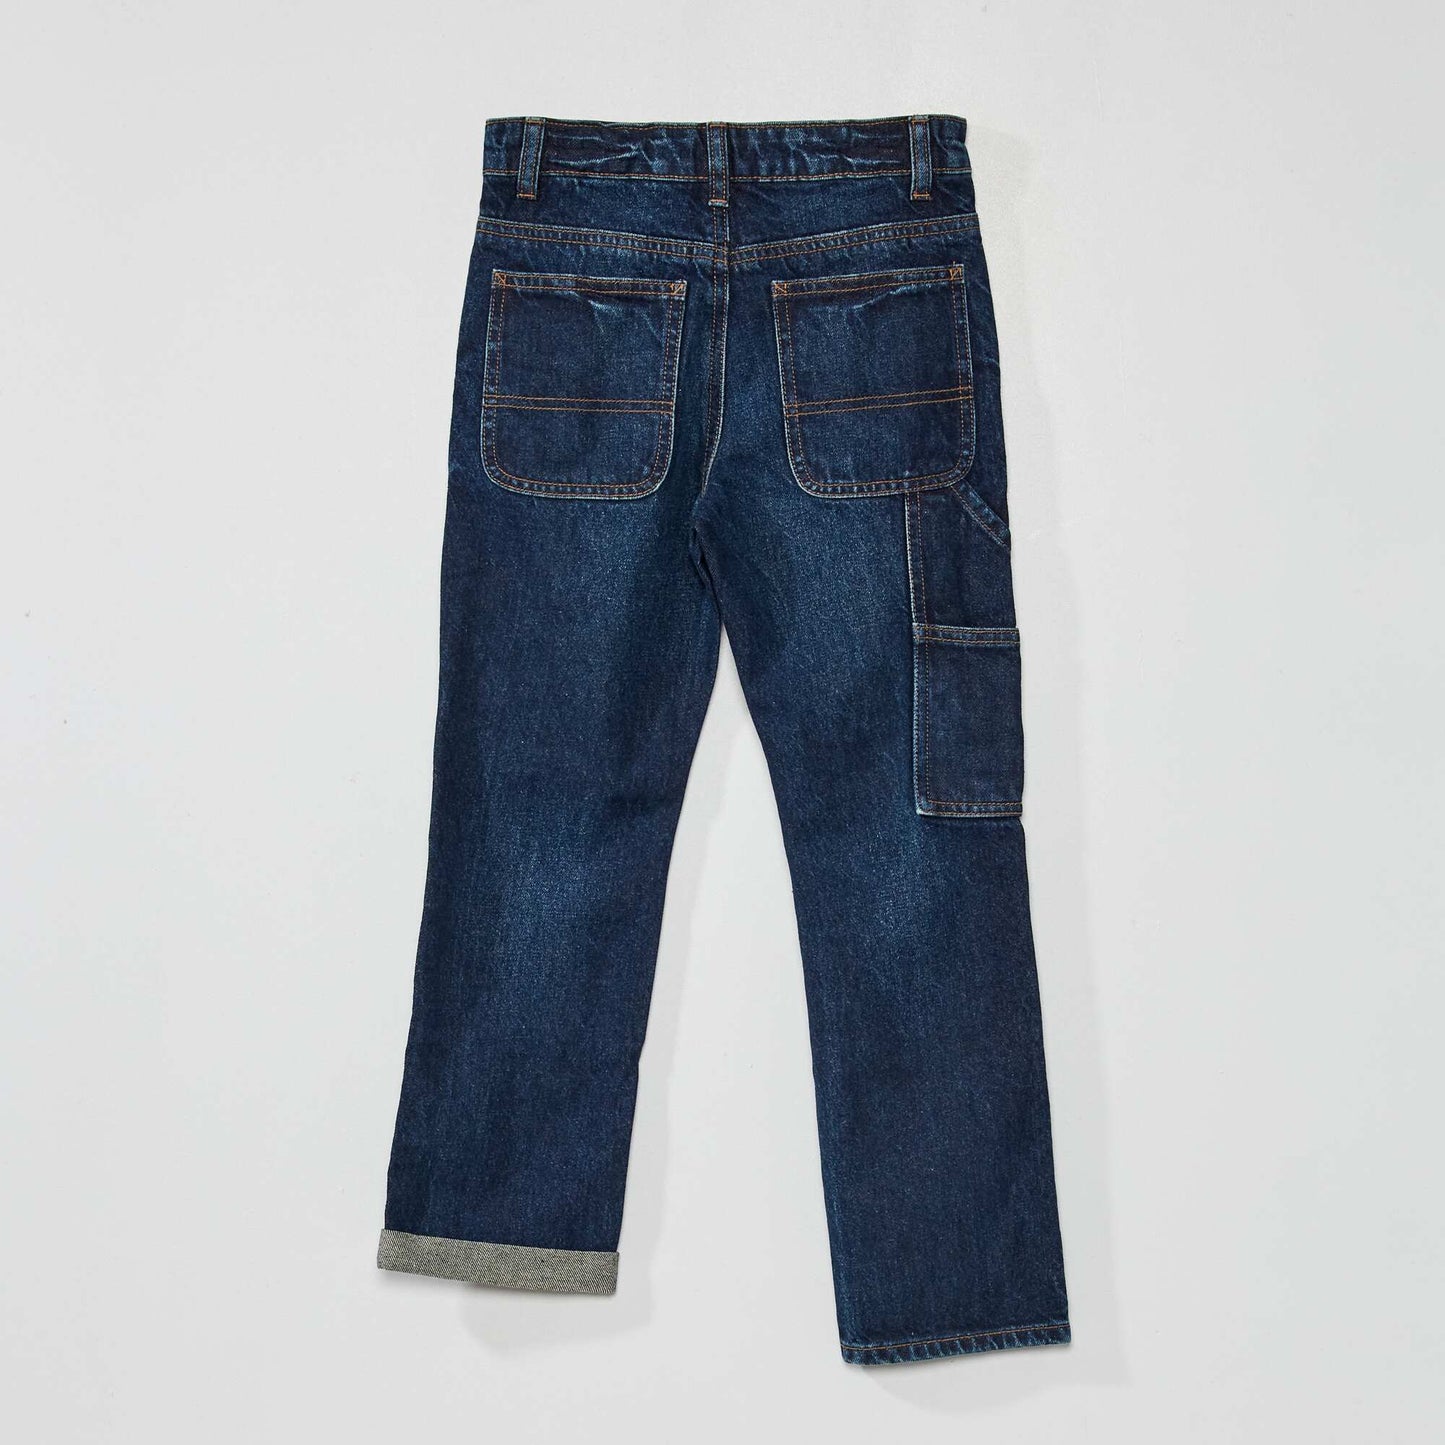 Straight-leg jeans - 5 pockets BLUE